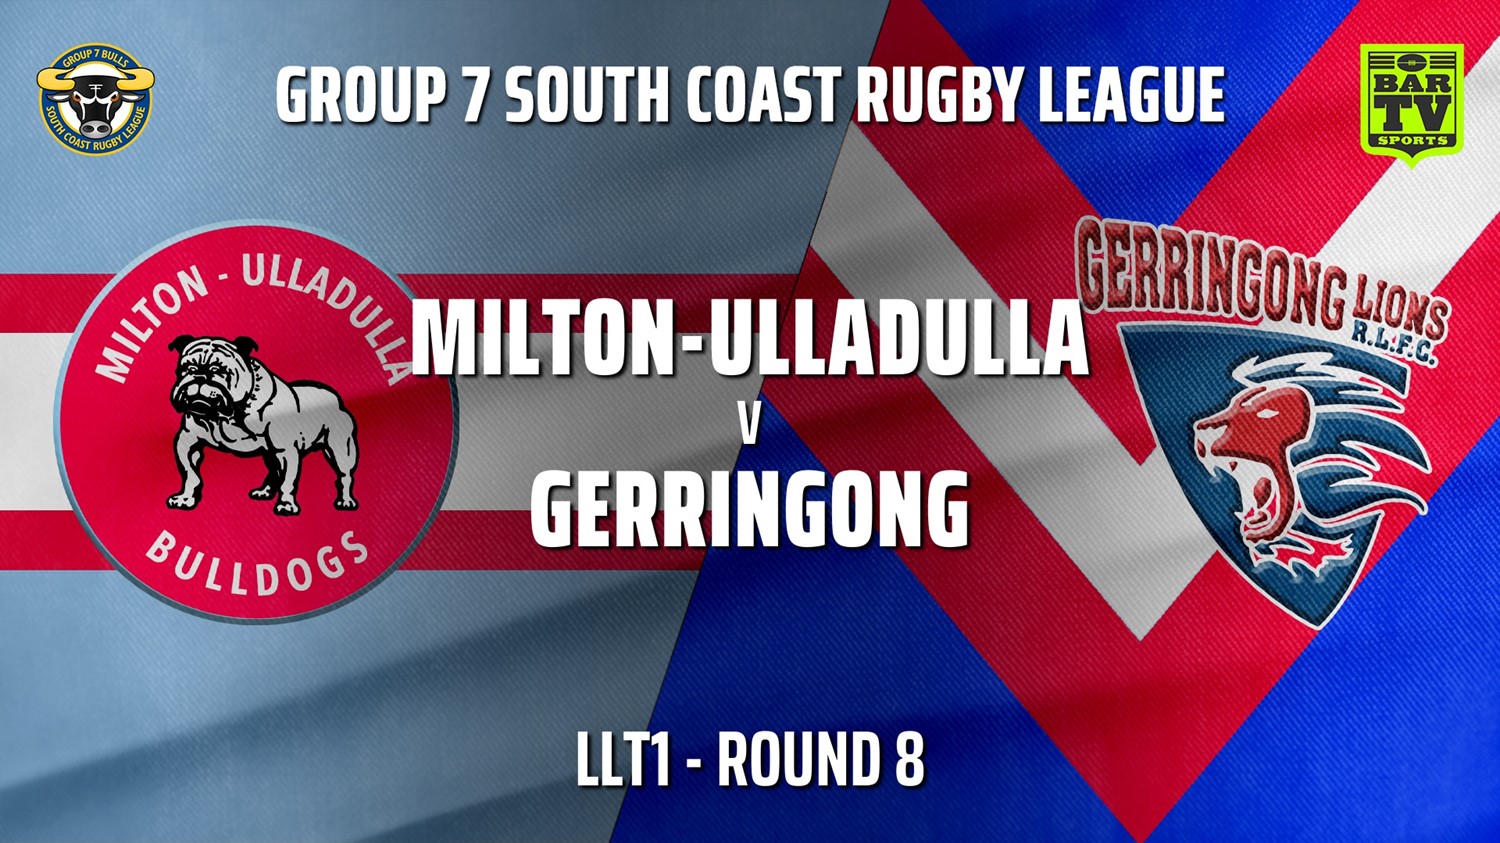 210606-Group 7 RL Round 8 - LLT1 - Milton-Ulladulla Bulldogs v Gerringong Slate Image